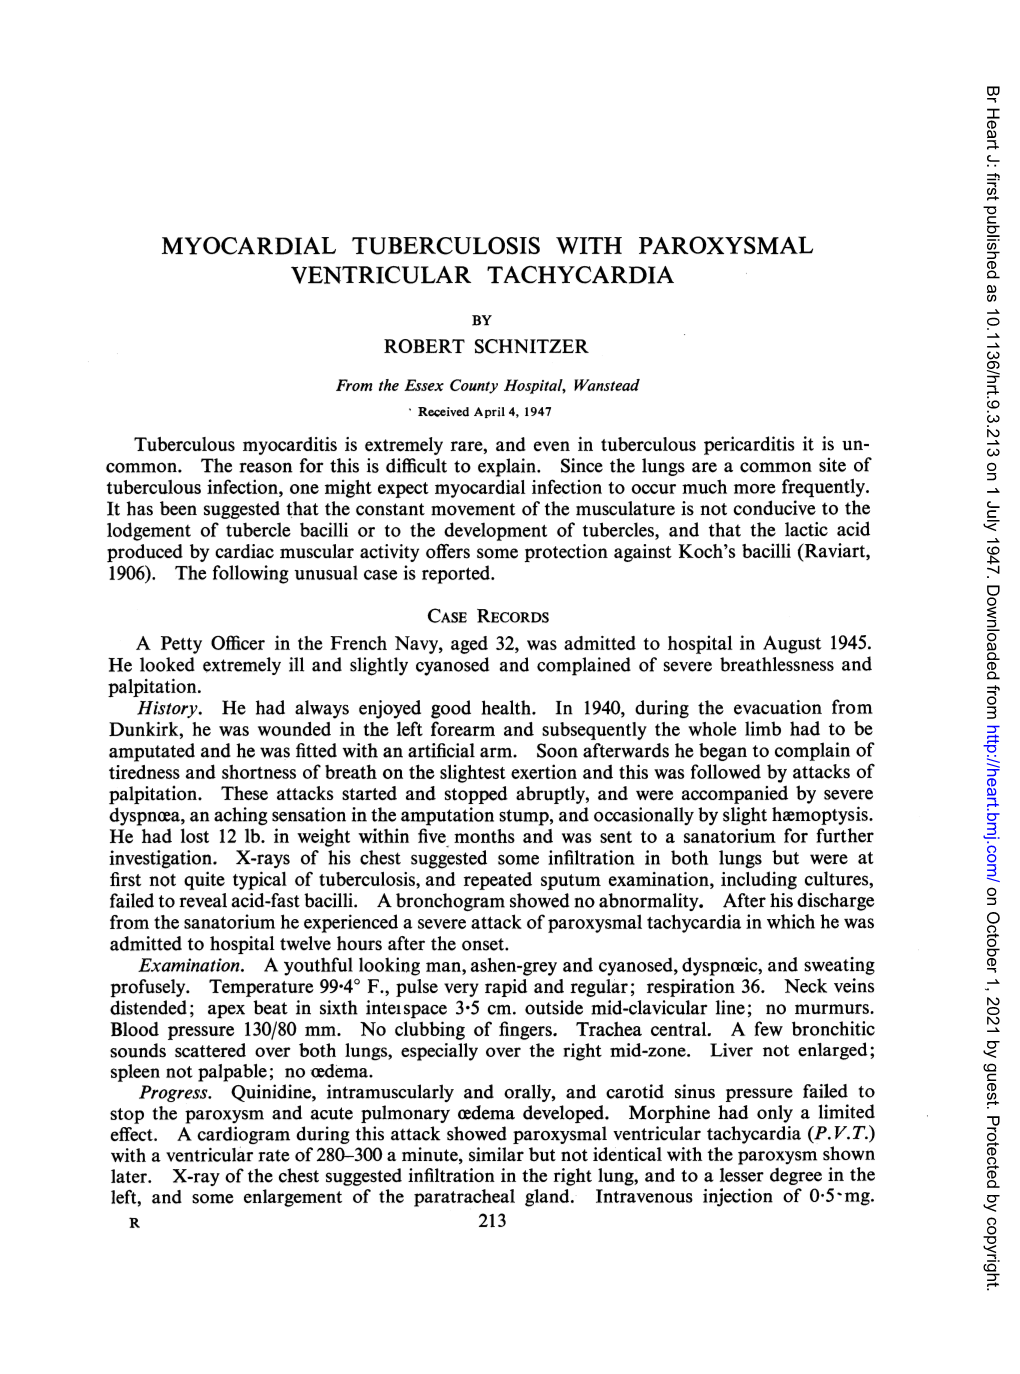 Myocardial Tuberculosis with Paroxysmal Ventricular Tachycardia